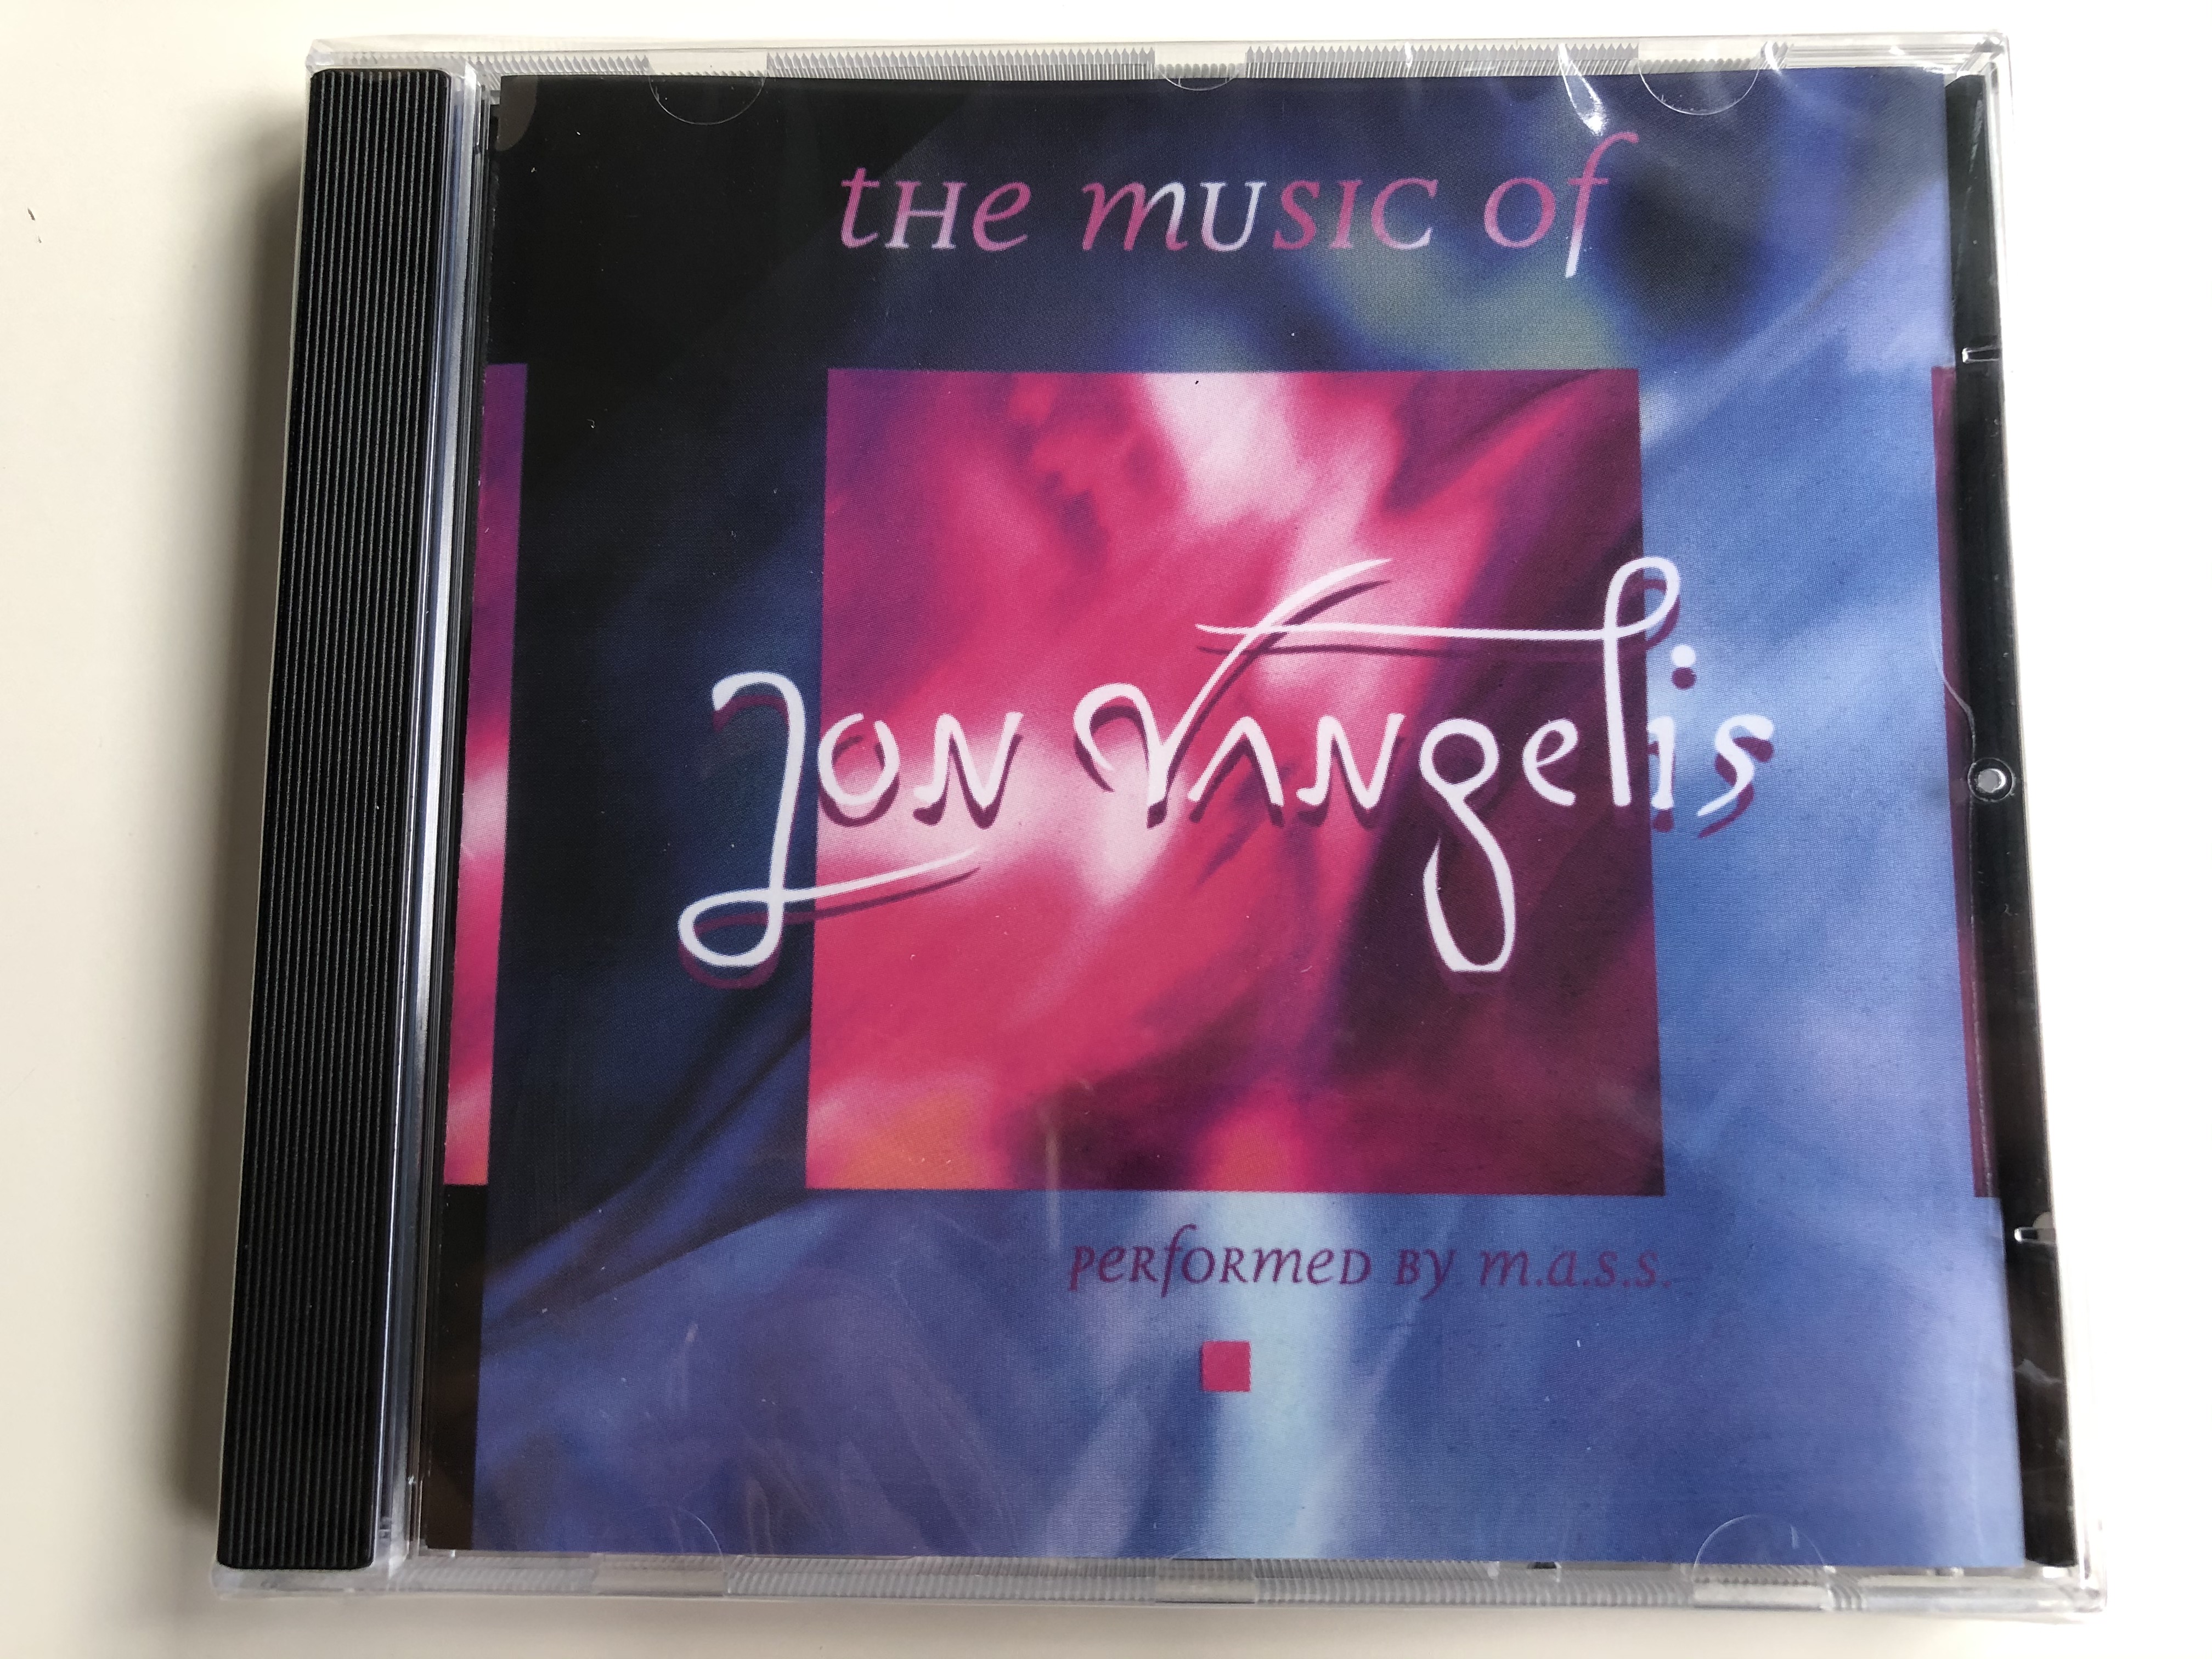 the-music-of-jon-vangelis-performed-by-m.a.s.s.-art-music-audio-cd-cd-20-1-.jpg